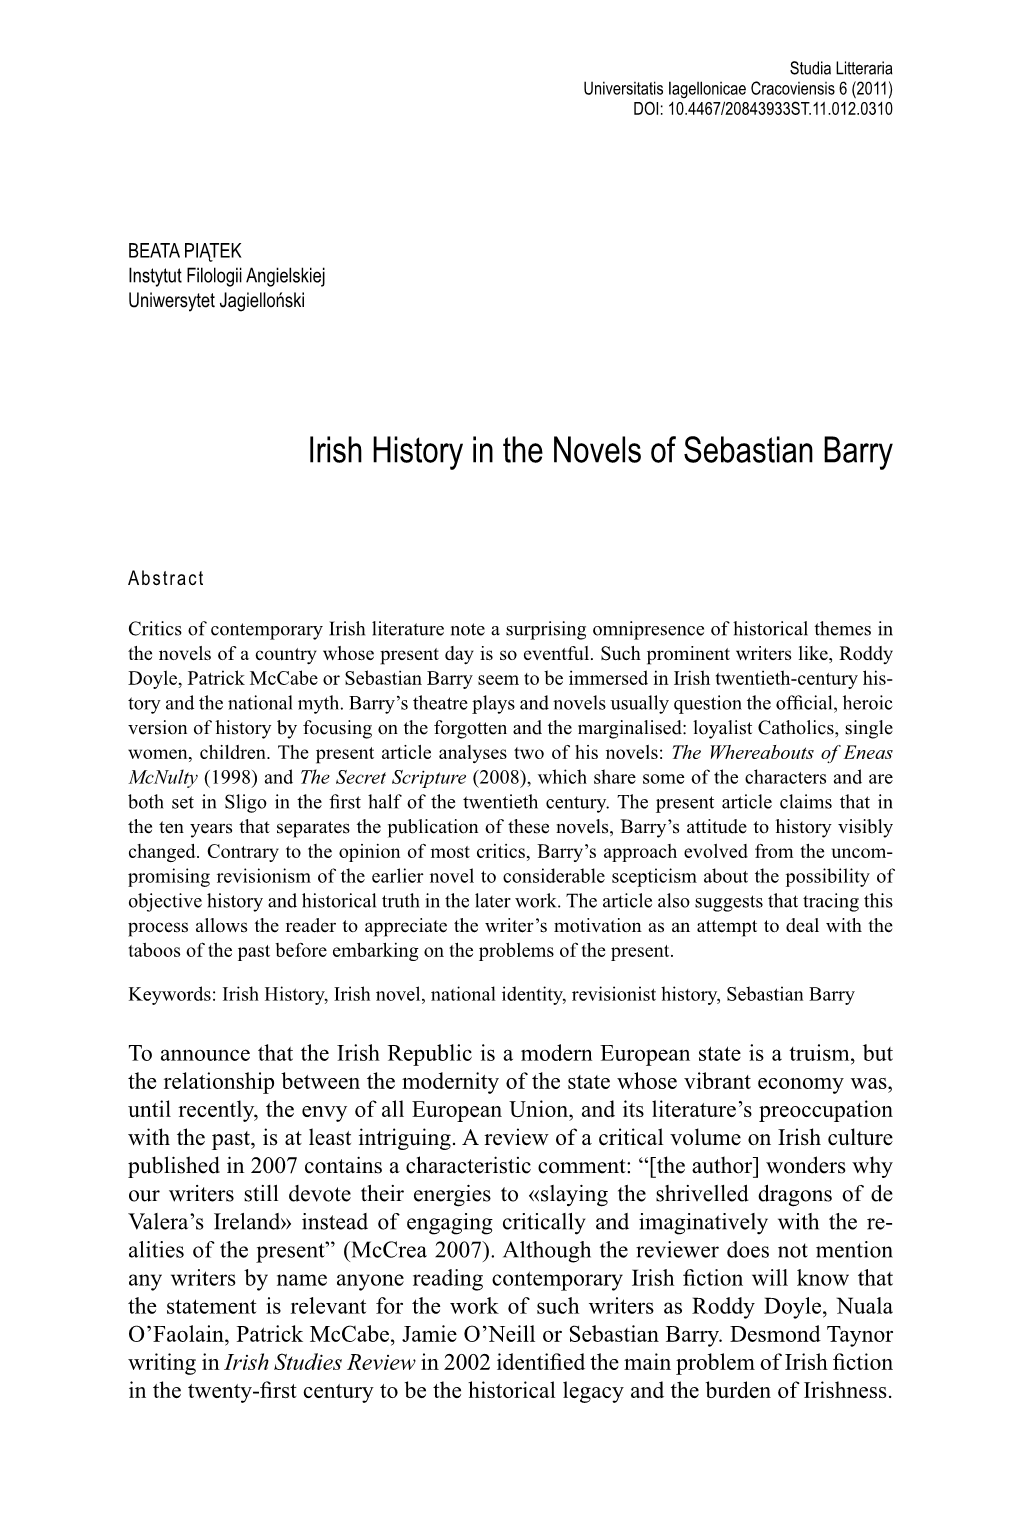 Irish History in the Novels of Sebastian Barry